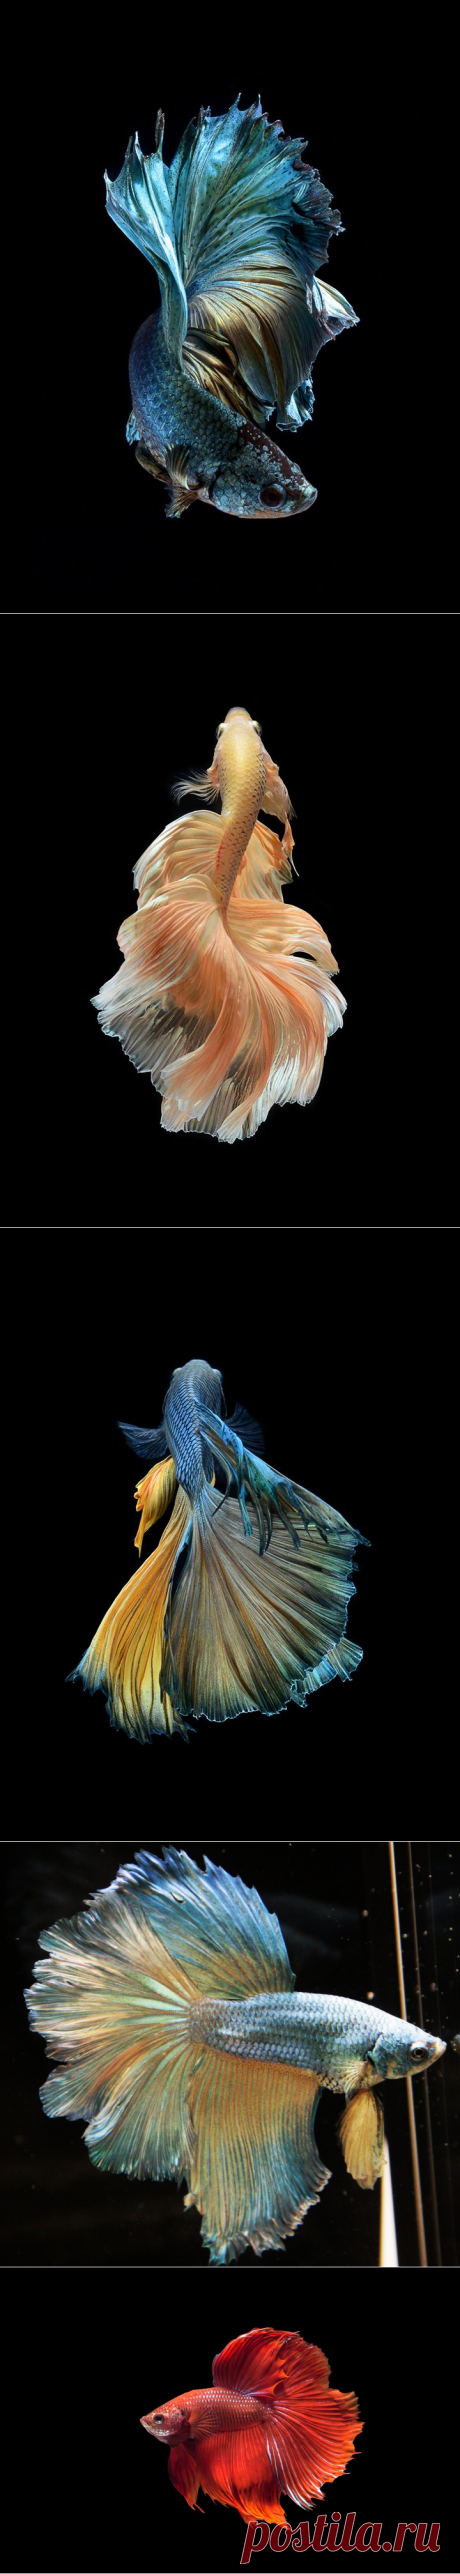 Betta Fish iPhone Wallpaper - WallpaperSafari